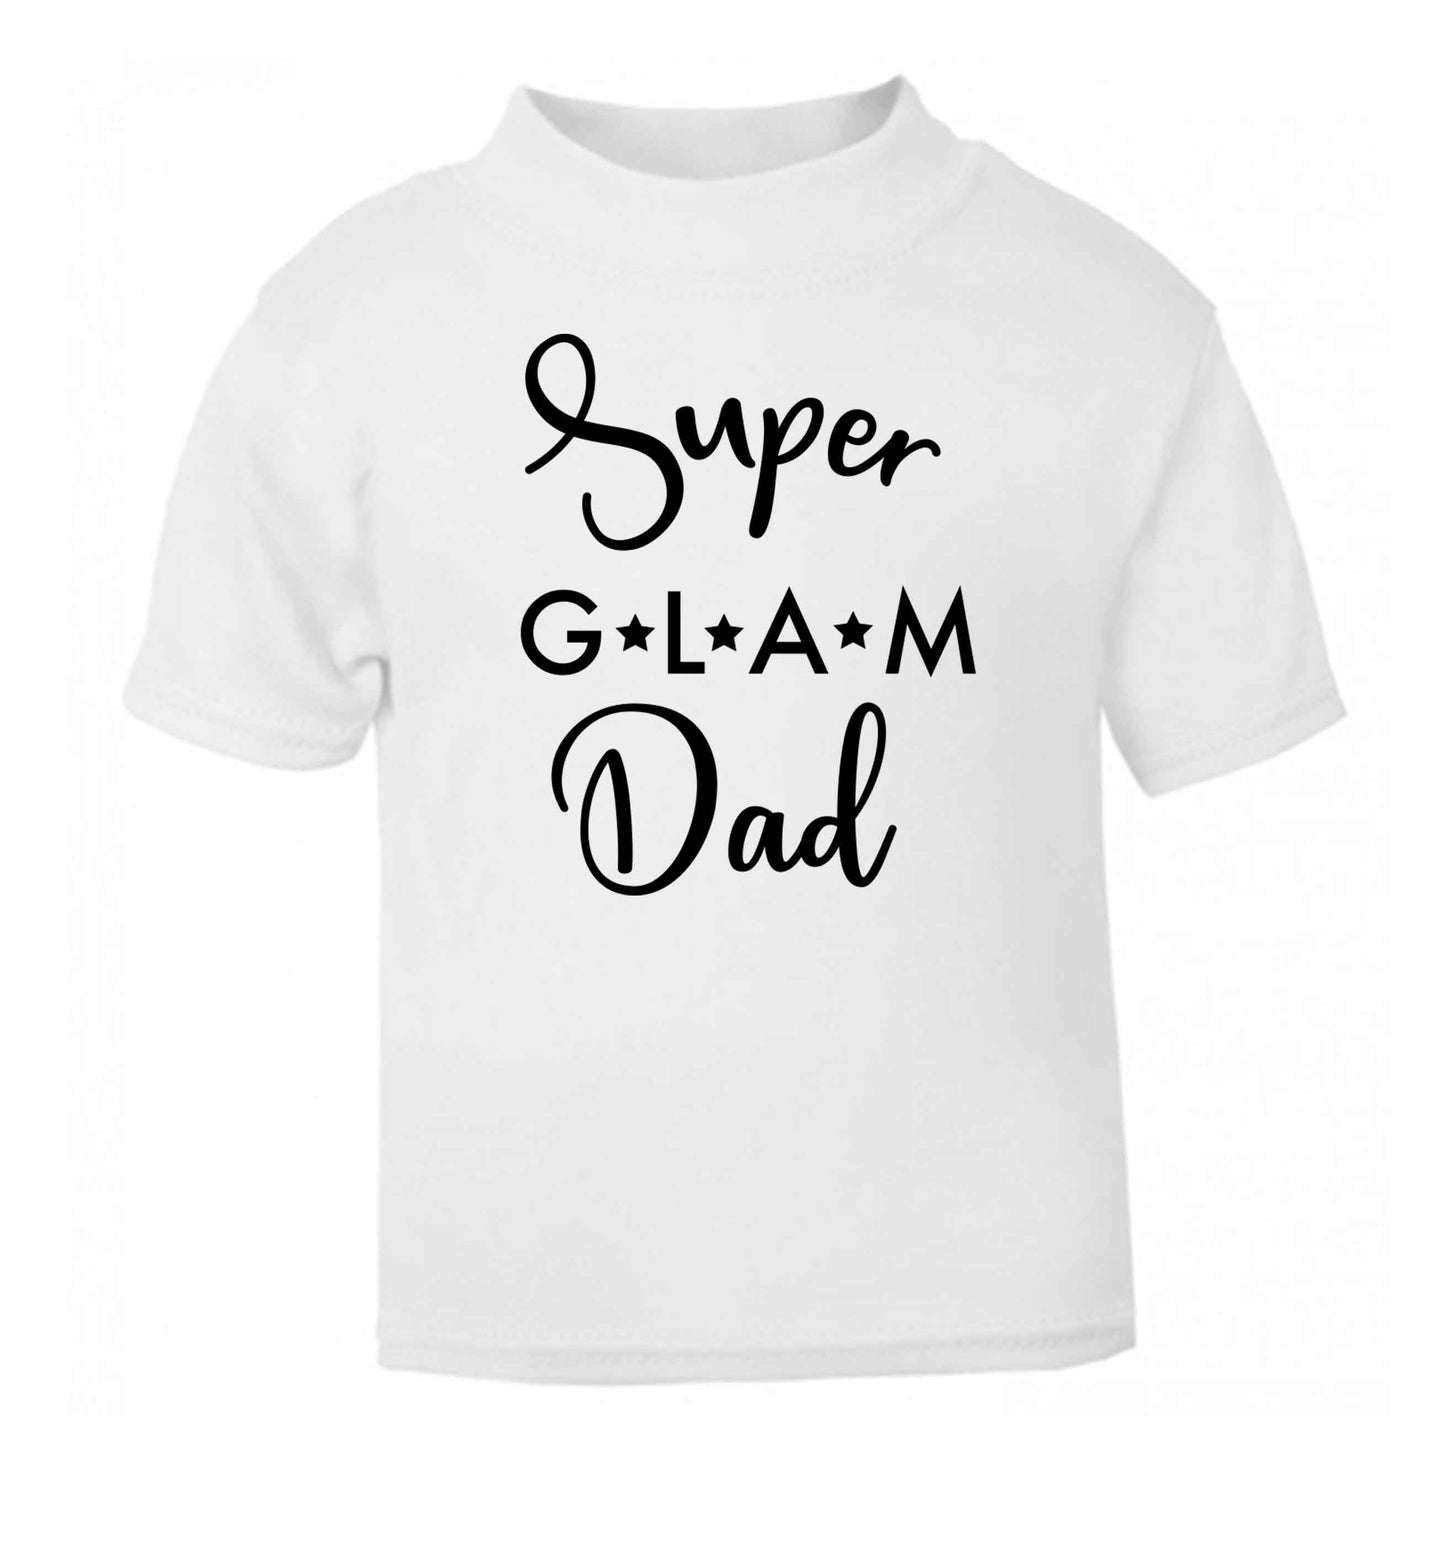 Super glam Dad white Baby Toddler Tshirt 2 Years